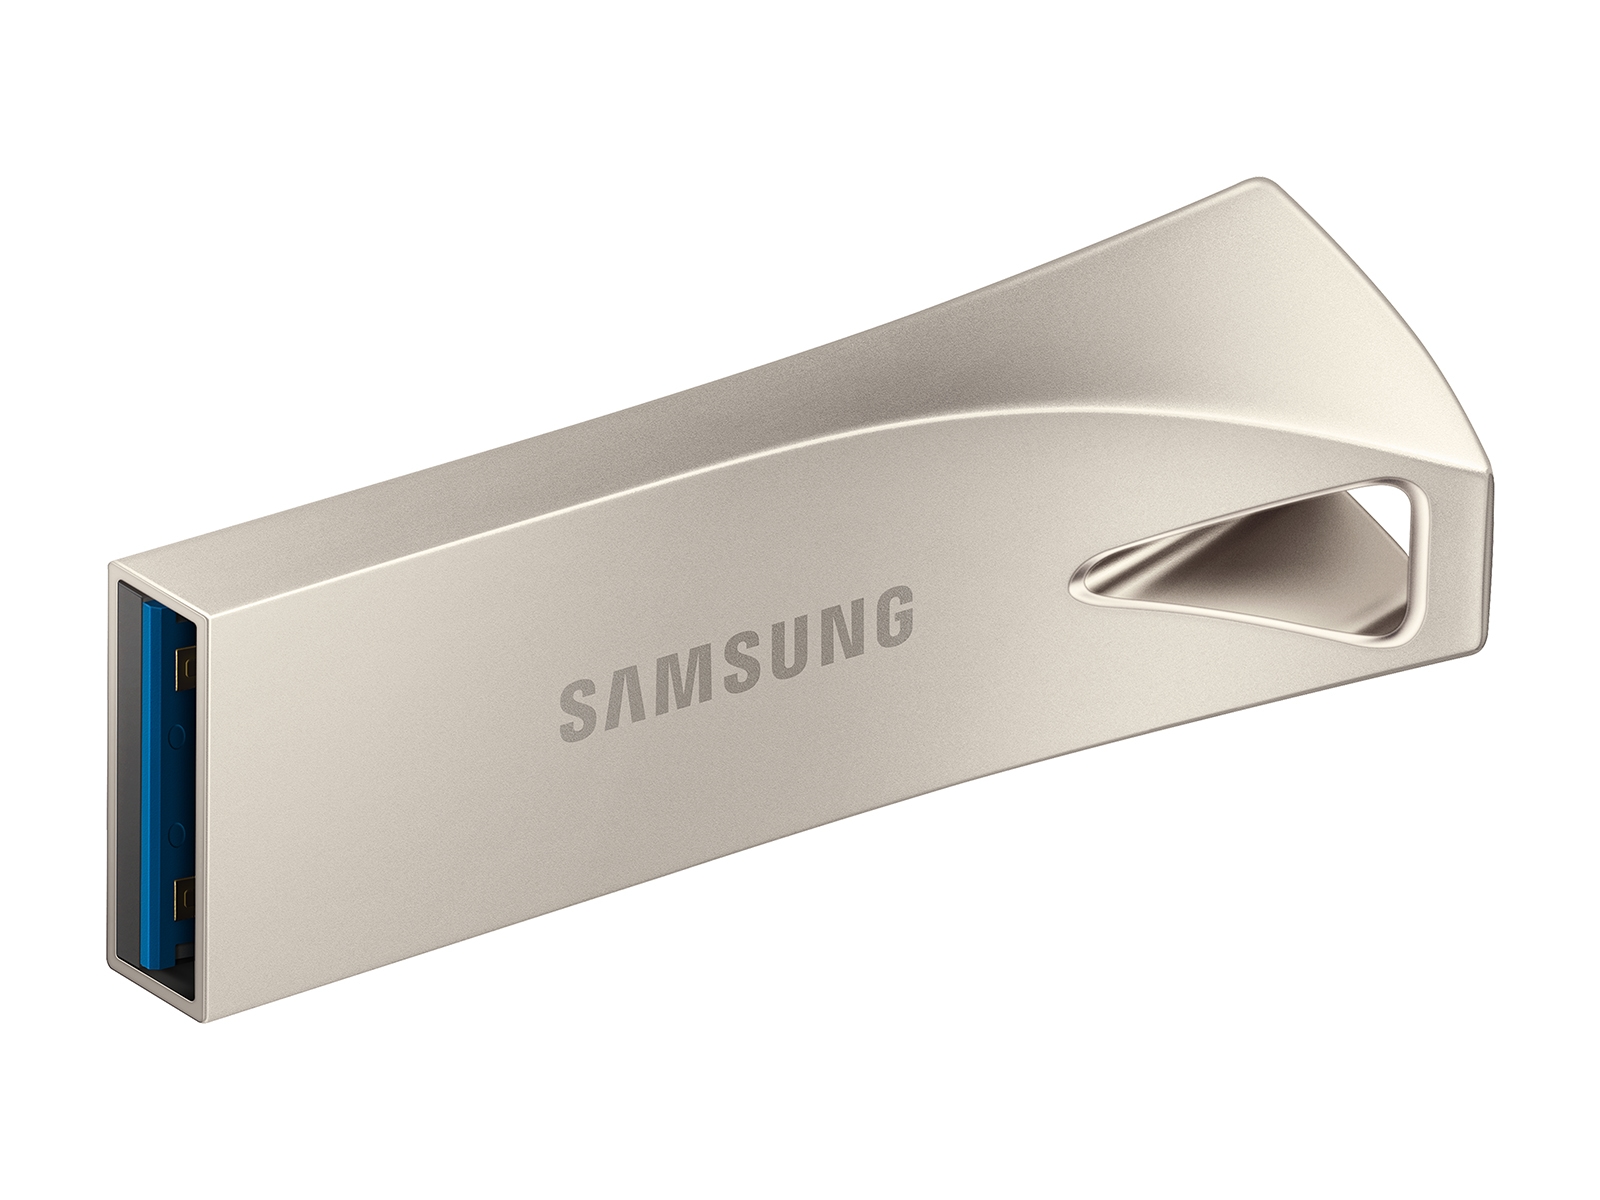 Samsung Clé USB - 32GB - 130 Mb/s Ultra Rapide - Argent - Gixcor